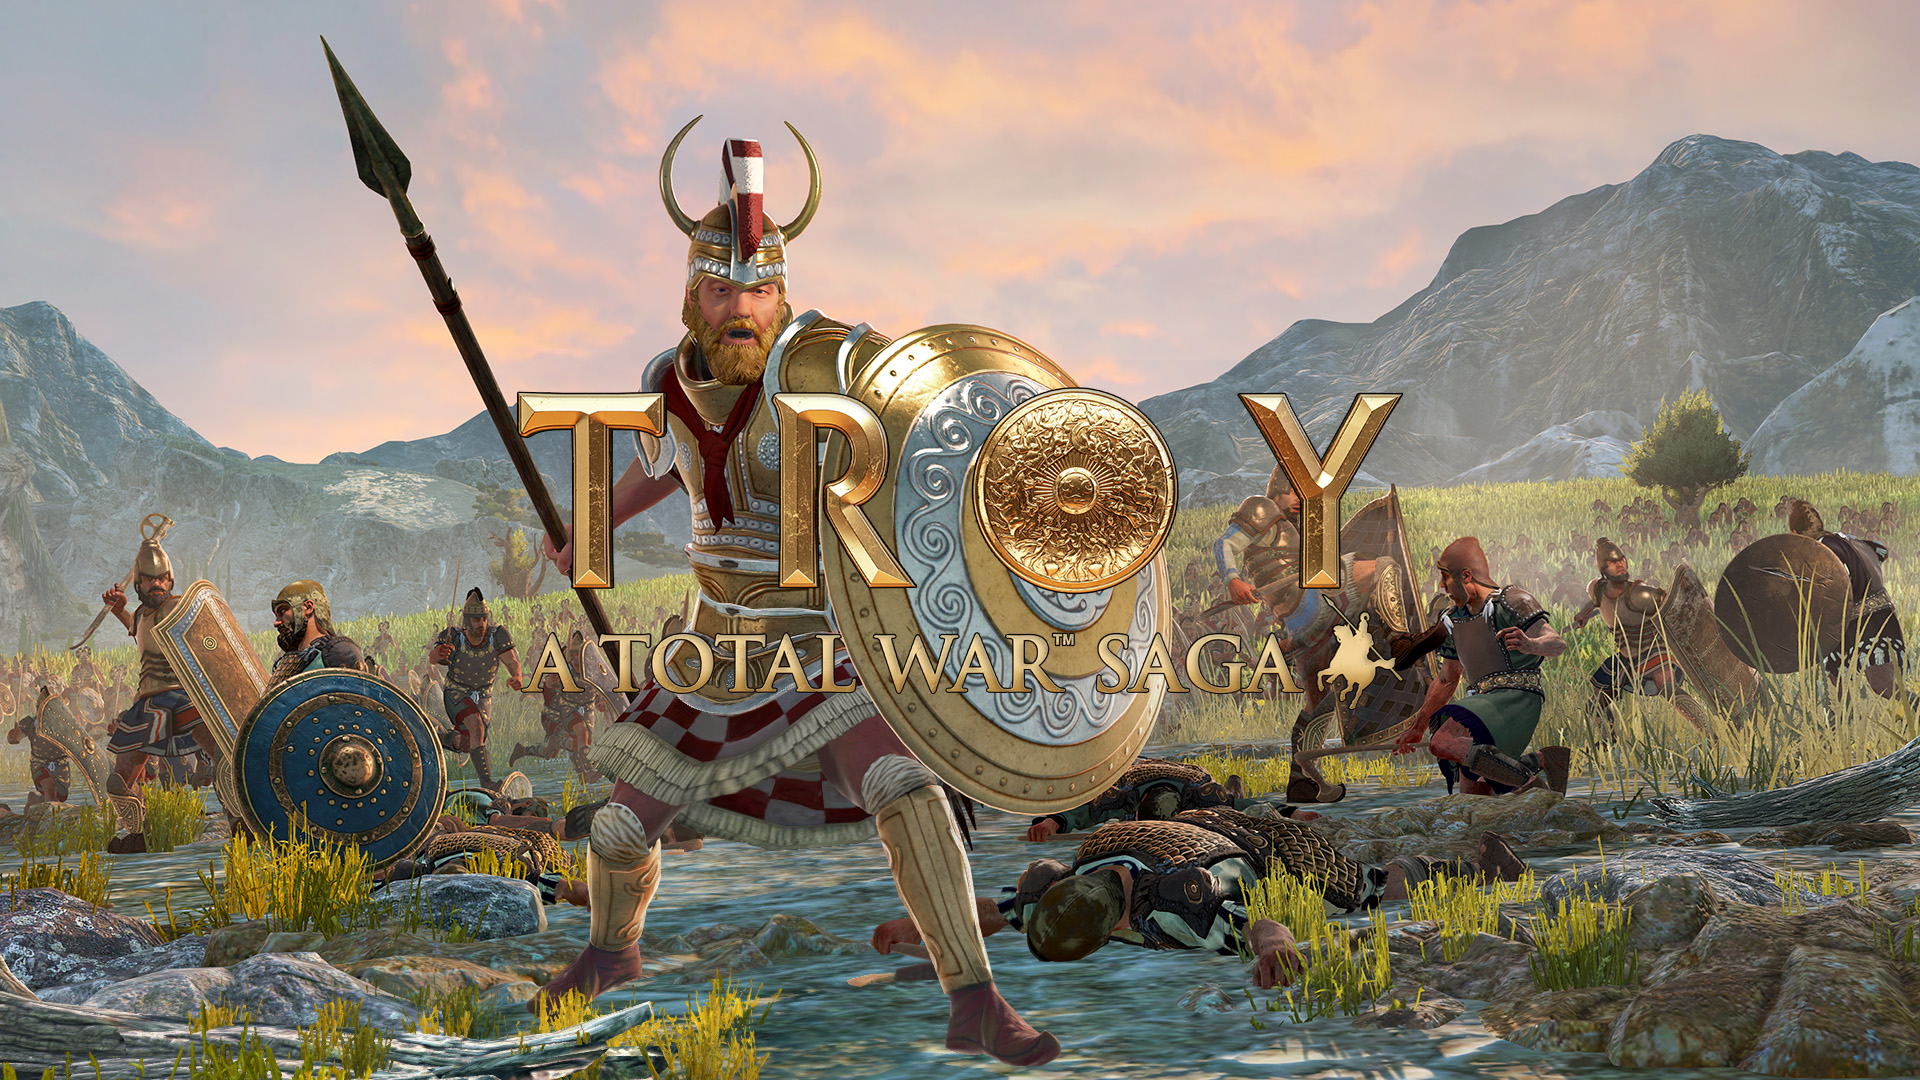 A Total War Saga: TROY HD Wallpaper